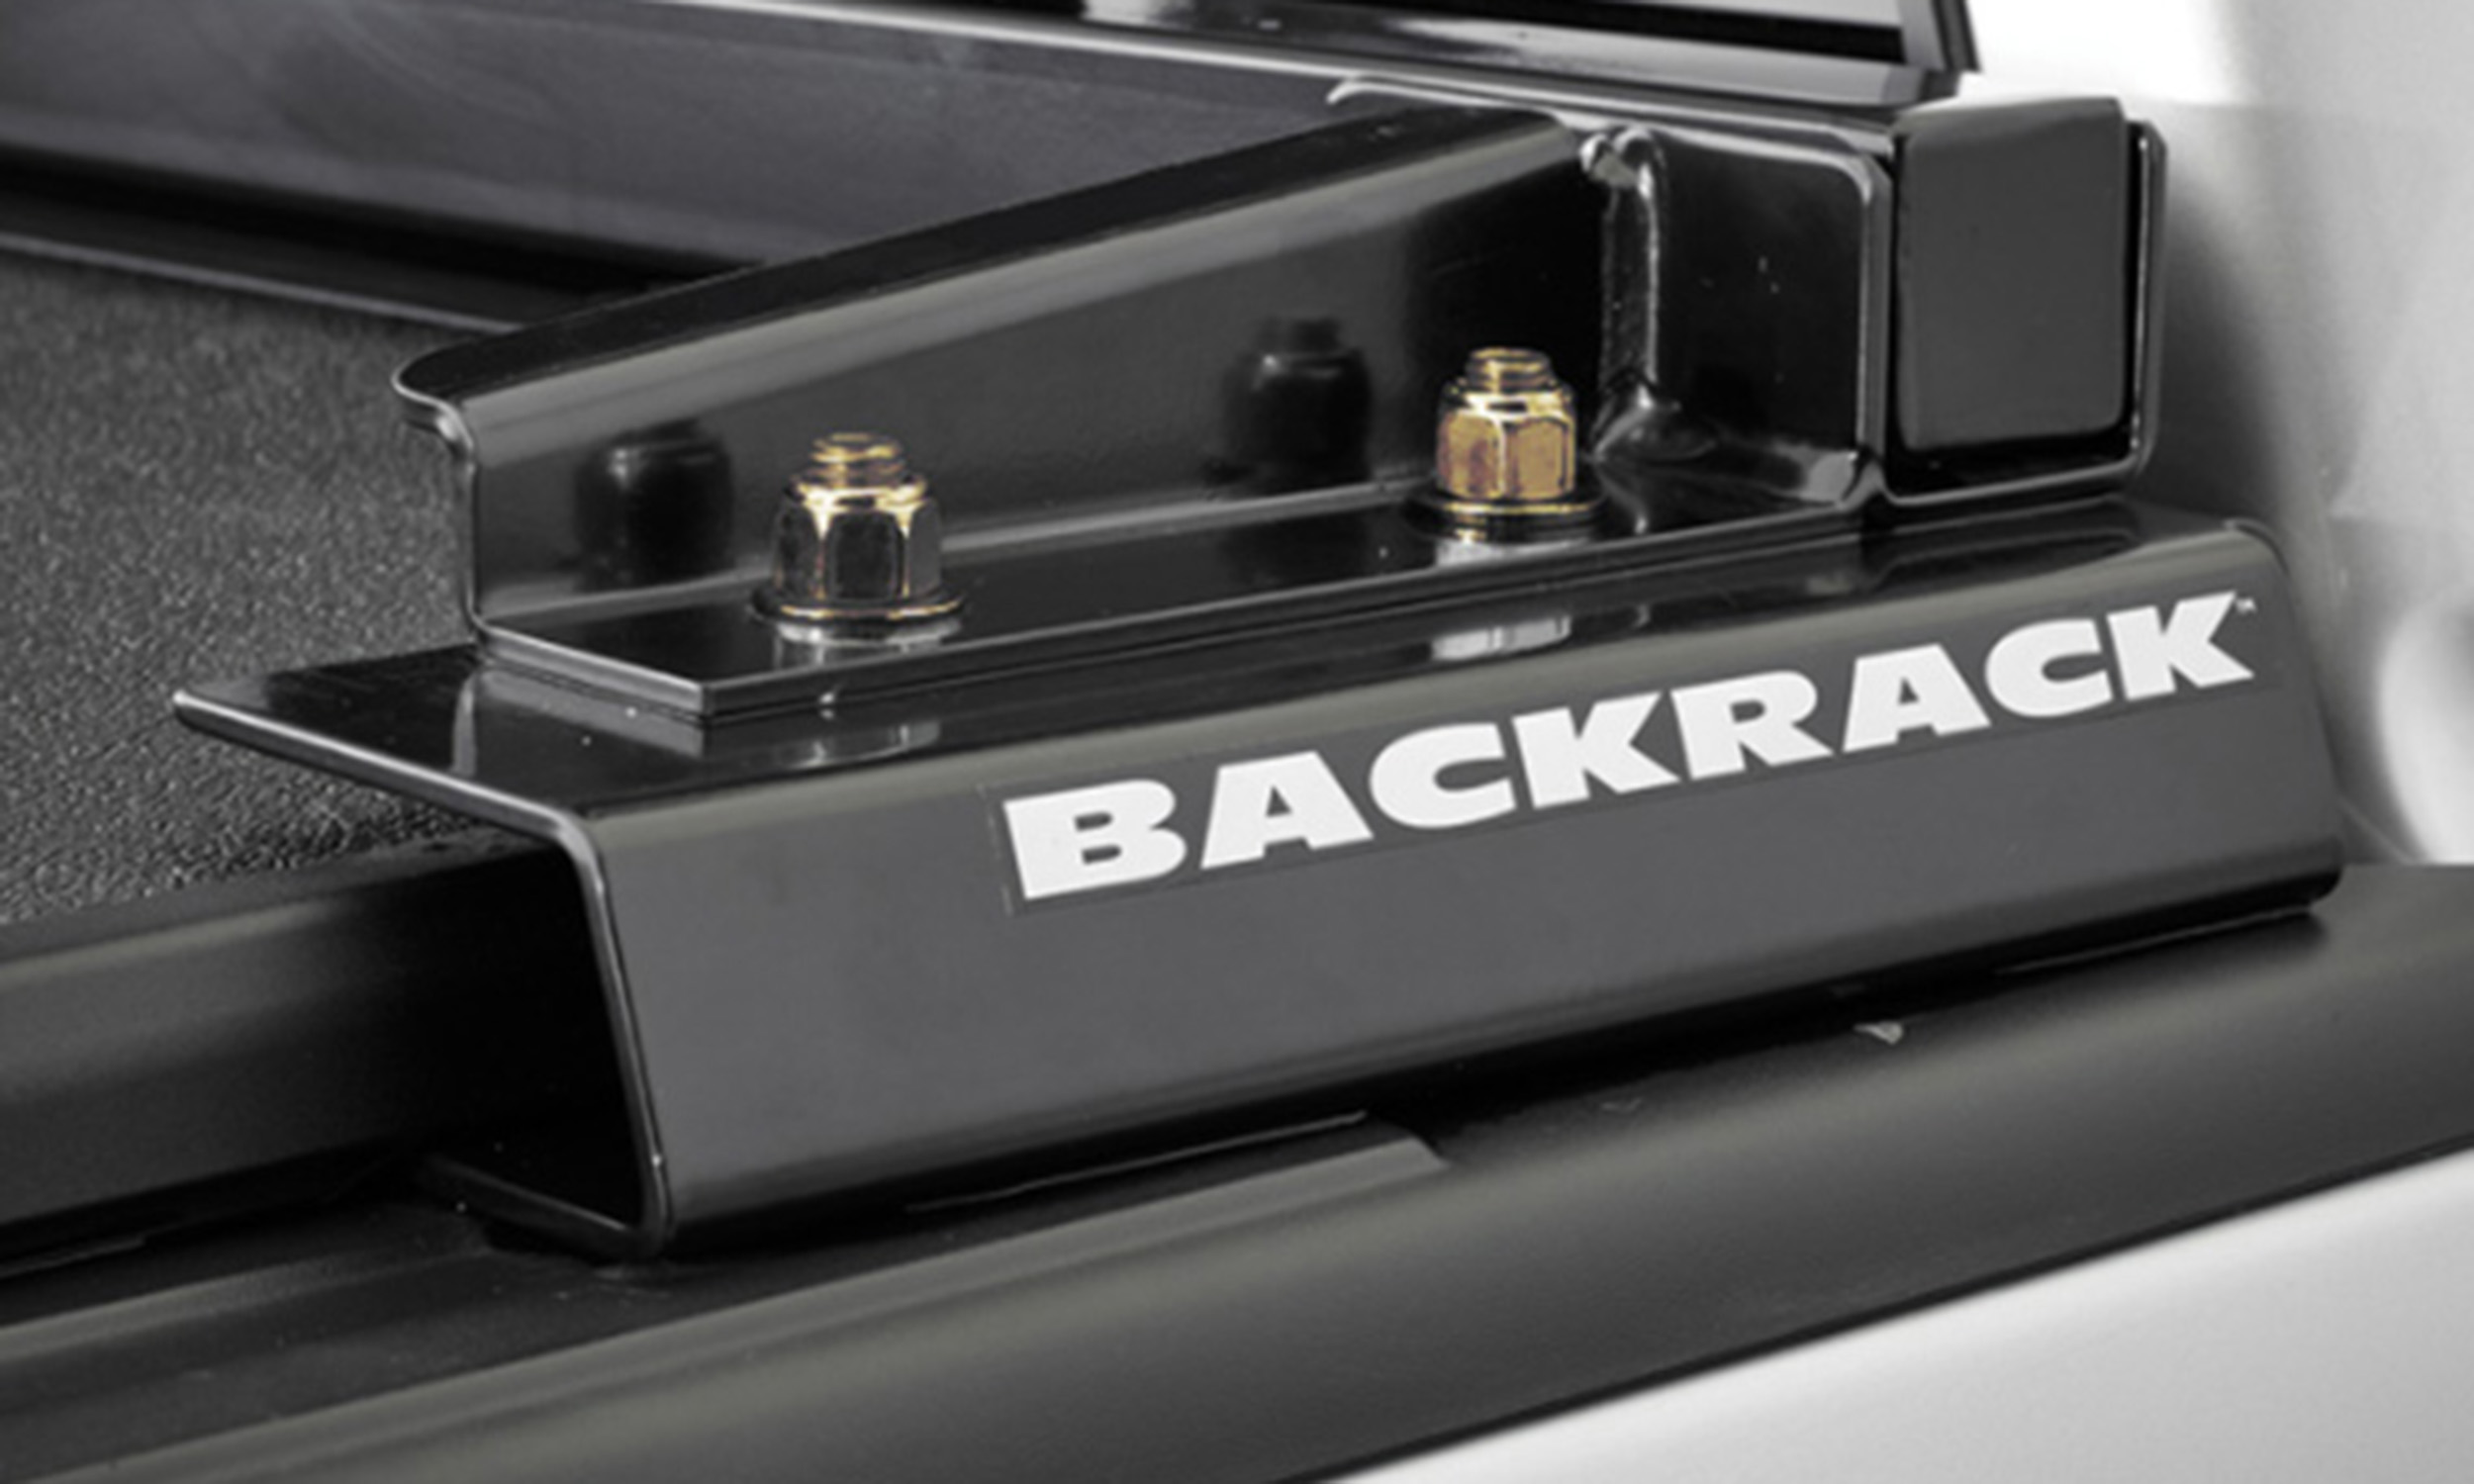 Backrack 50112 Truck Cab Protector / Headache Rack Installation Kit